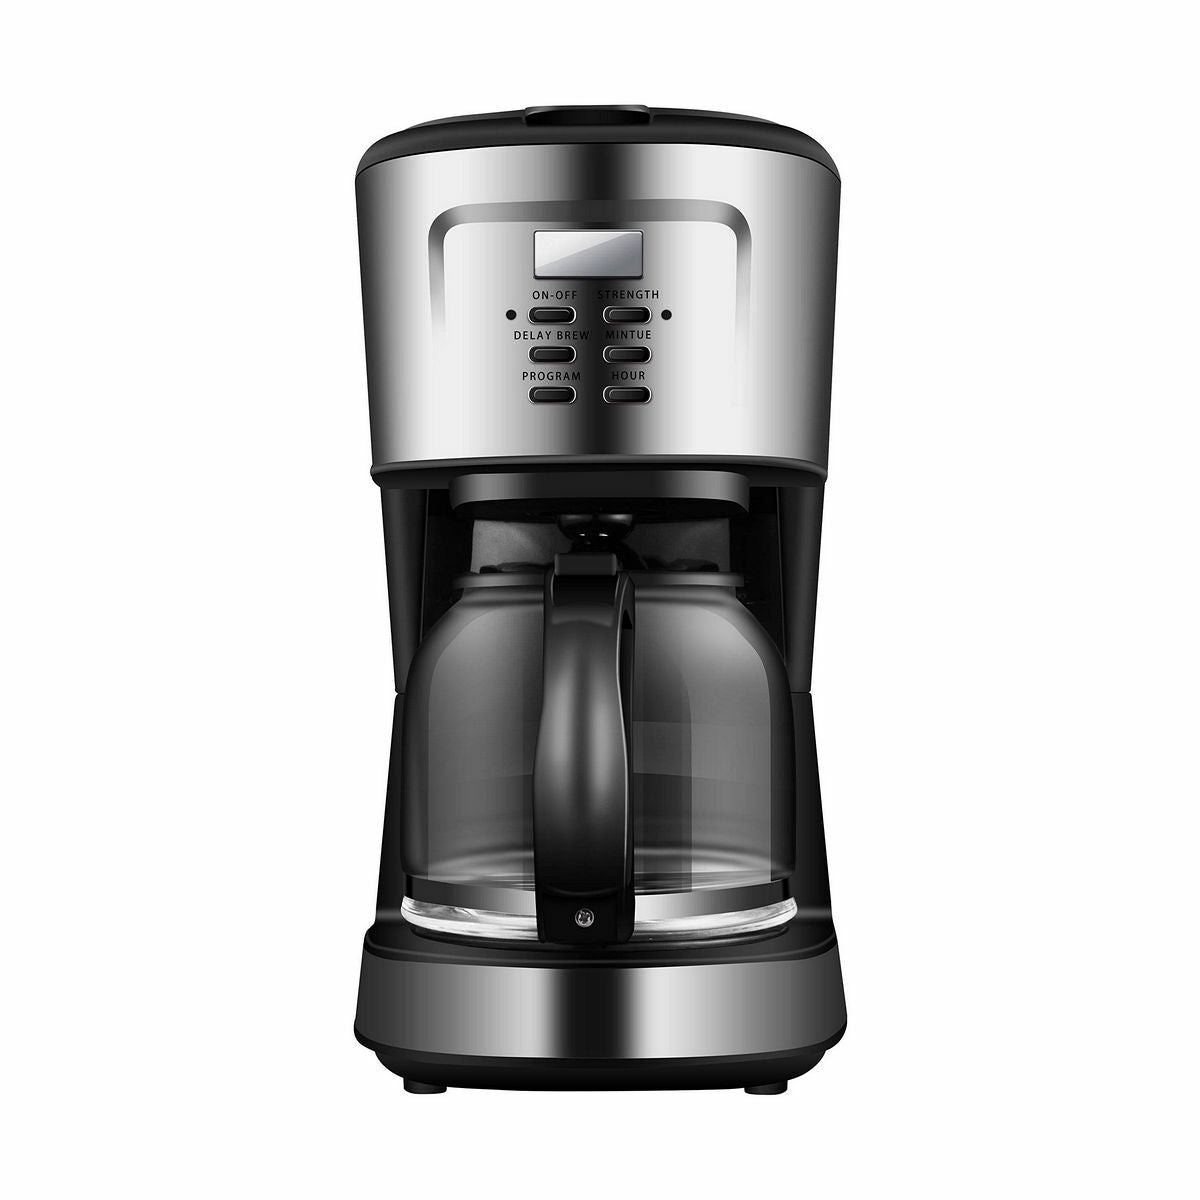 Kaffebryggare FAGOR FGE784 900 W 1,5 L